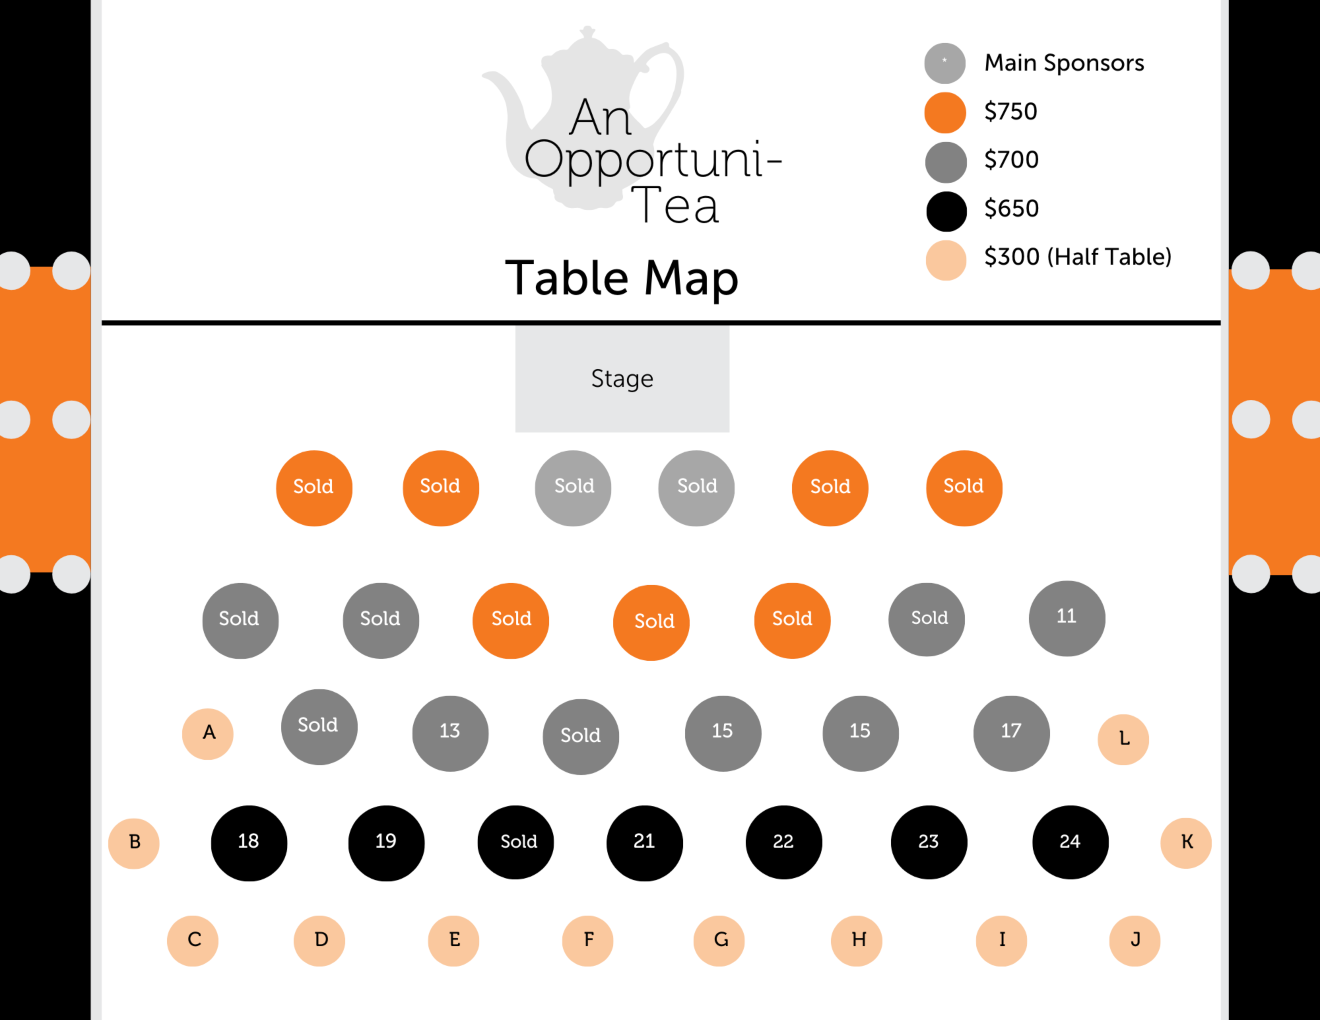 Opportuni-Tea Table Map